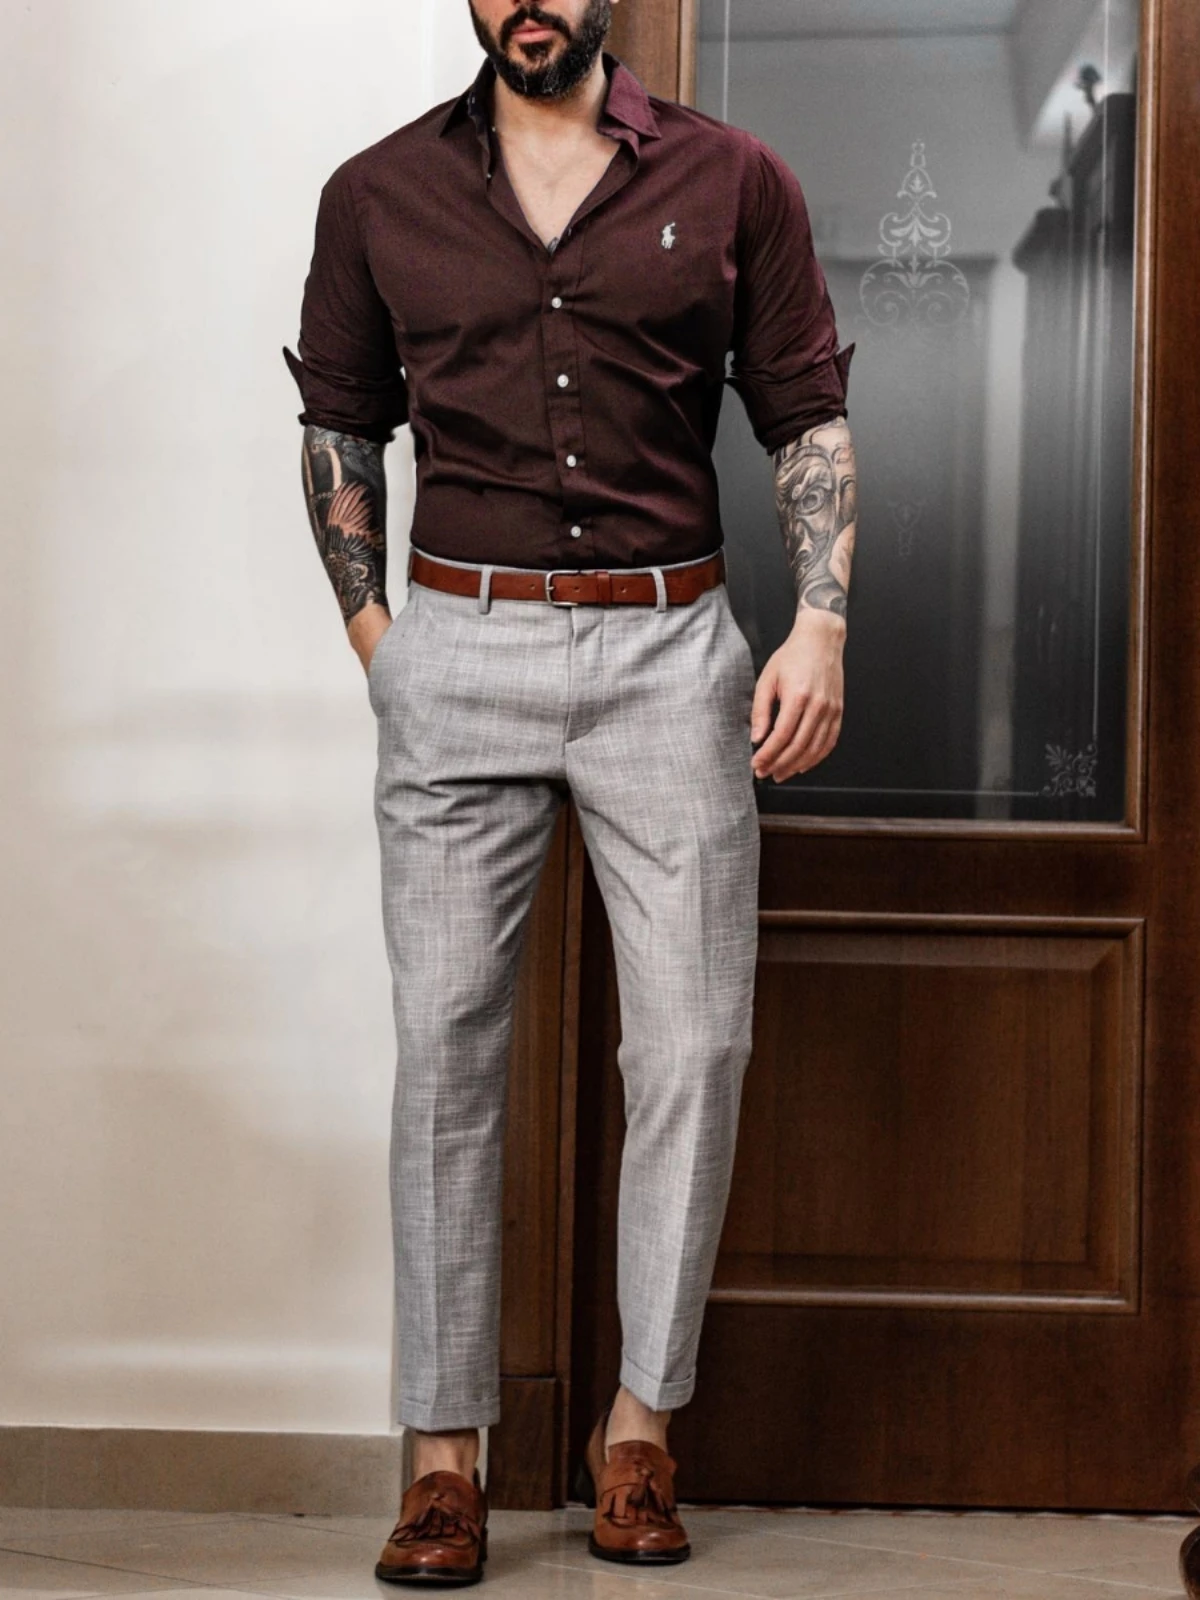 Light grey pants with brown shirt